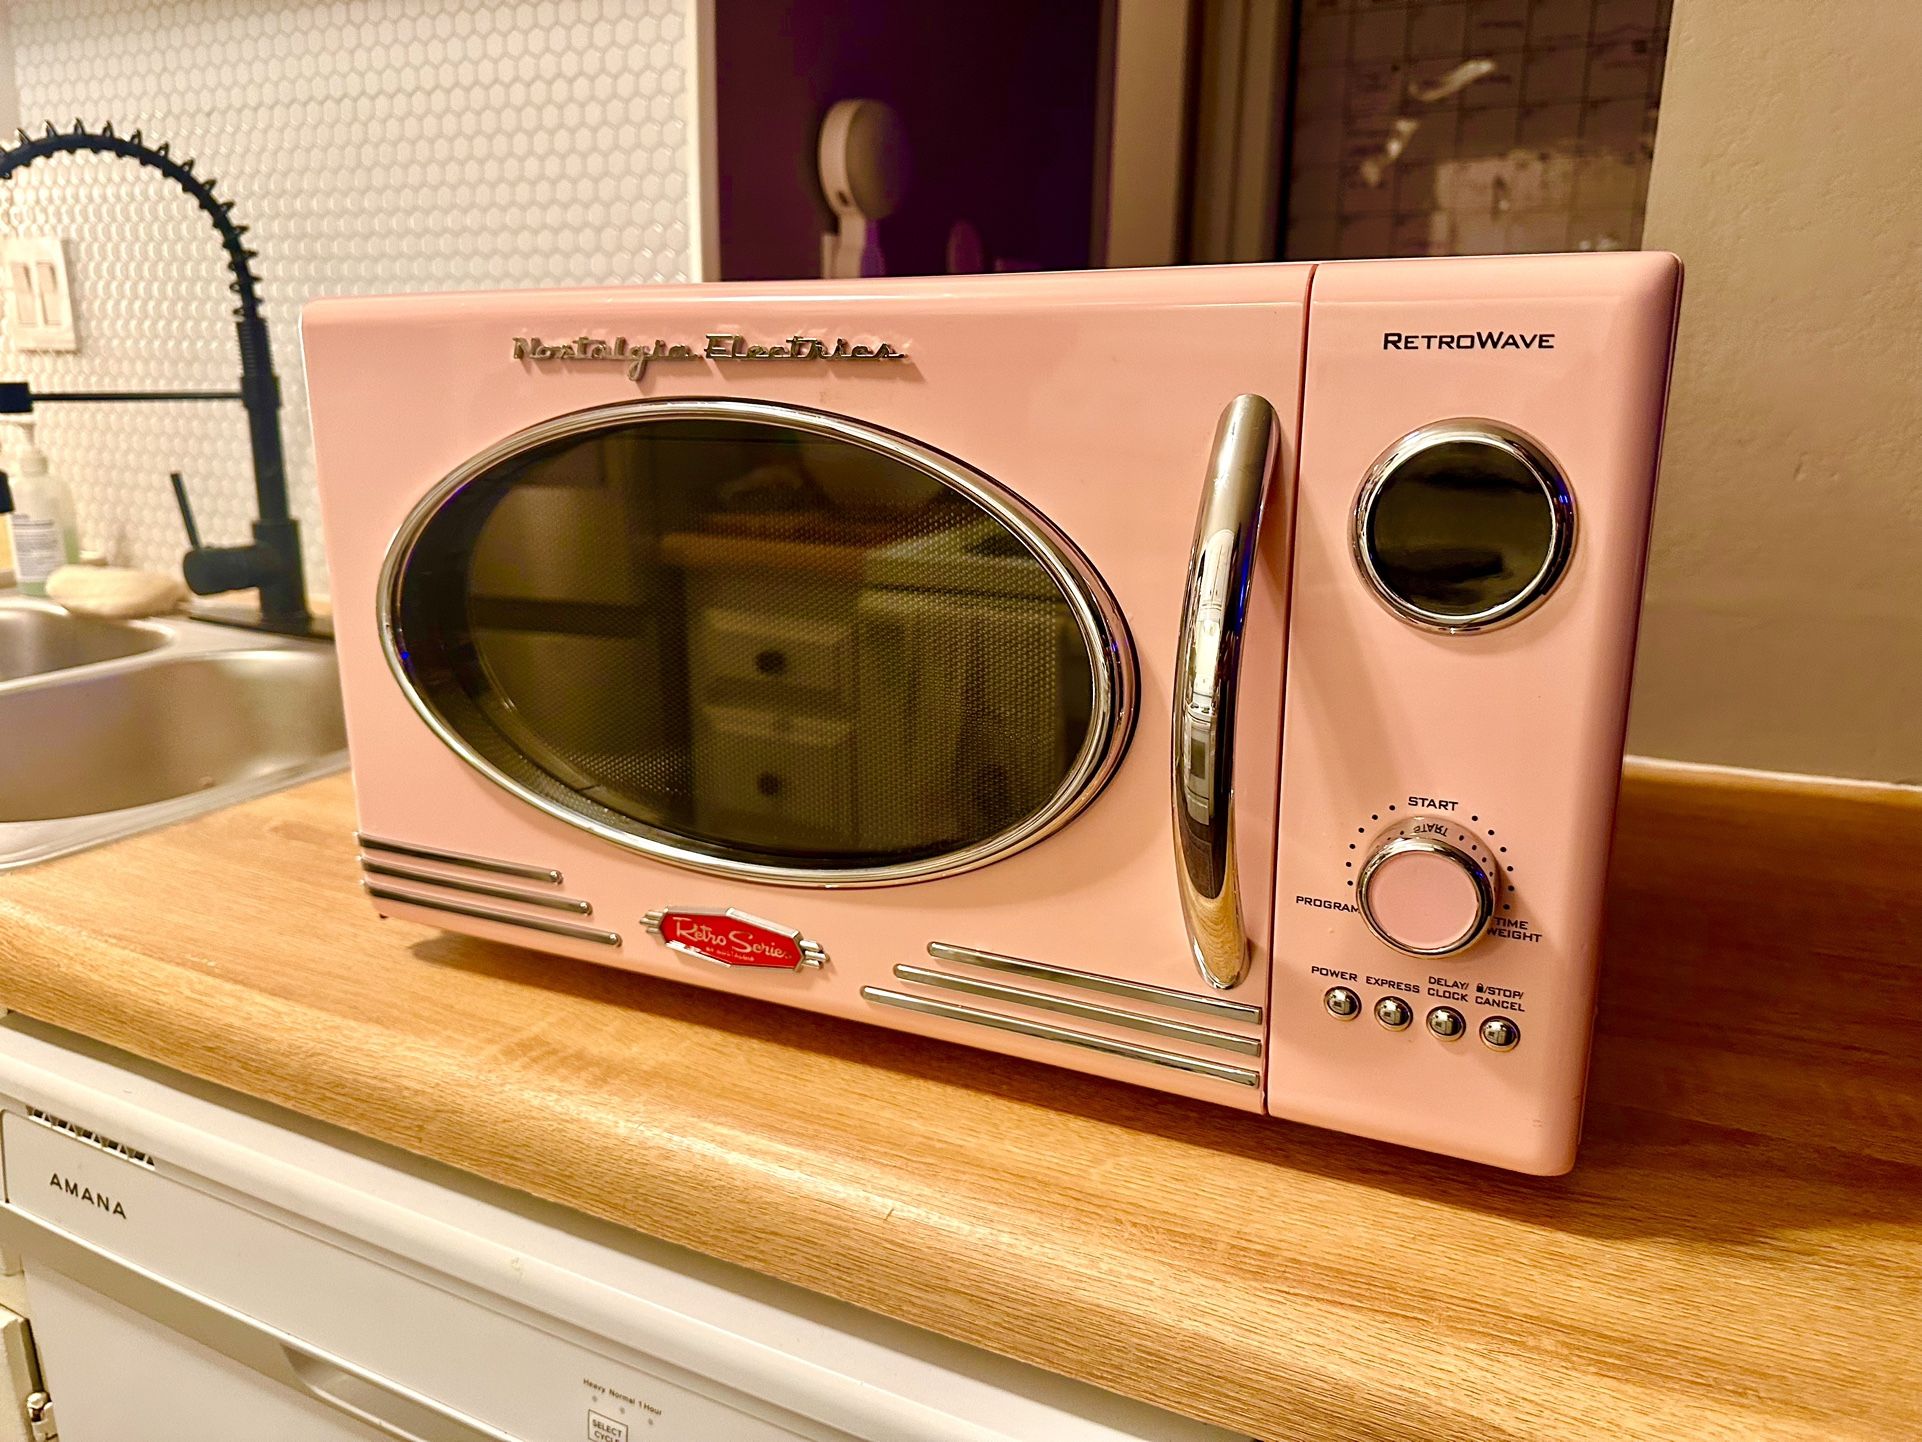 Nostalgia Electrics Microwave (Pink!)